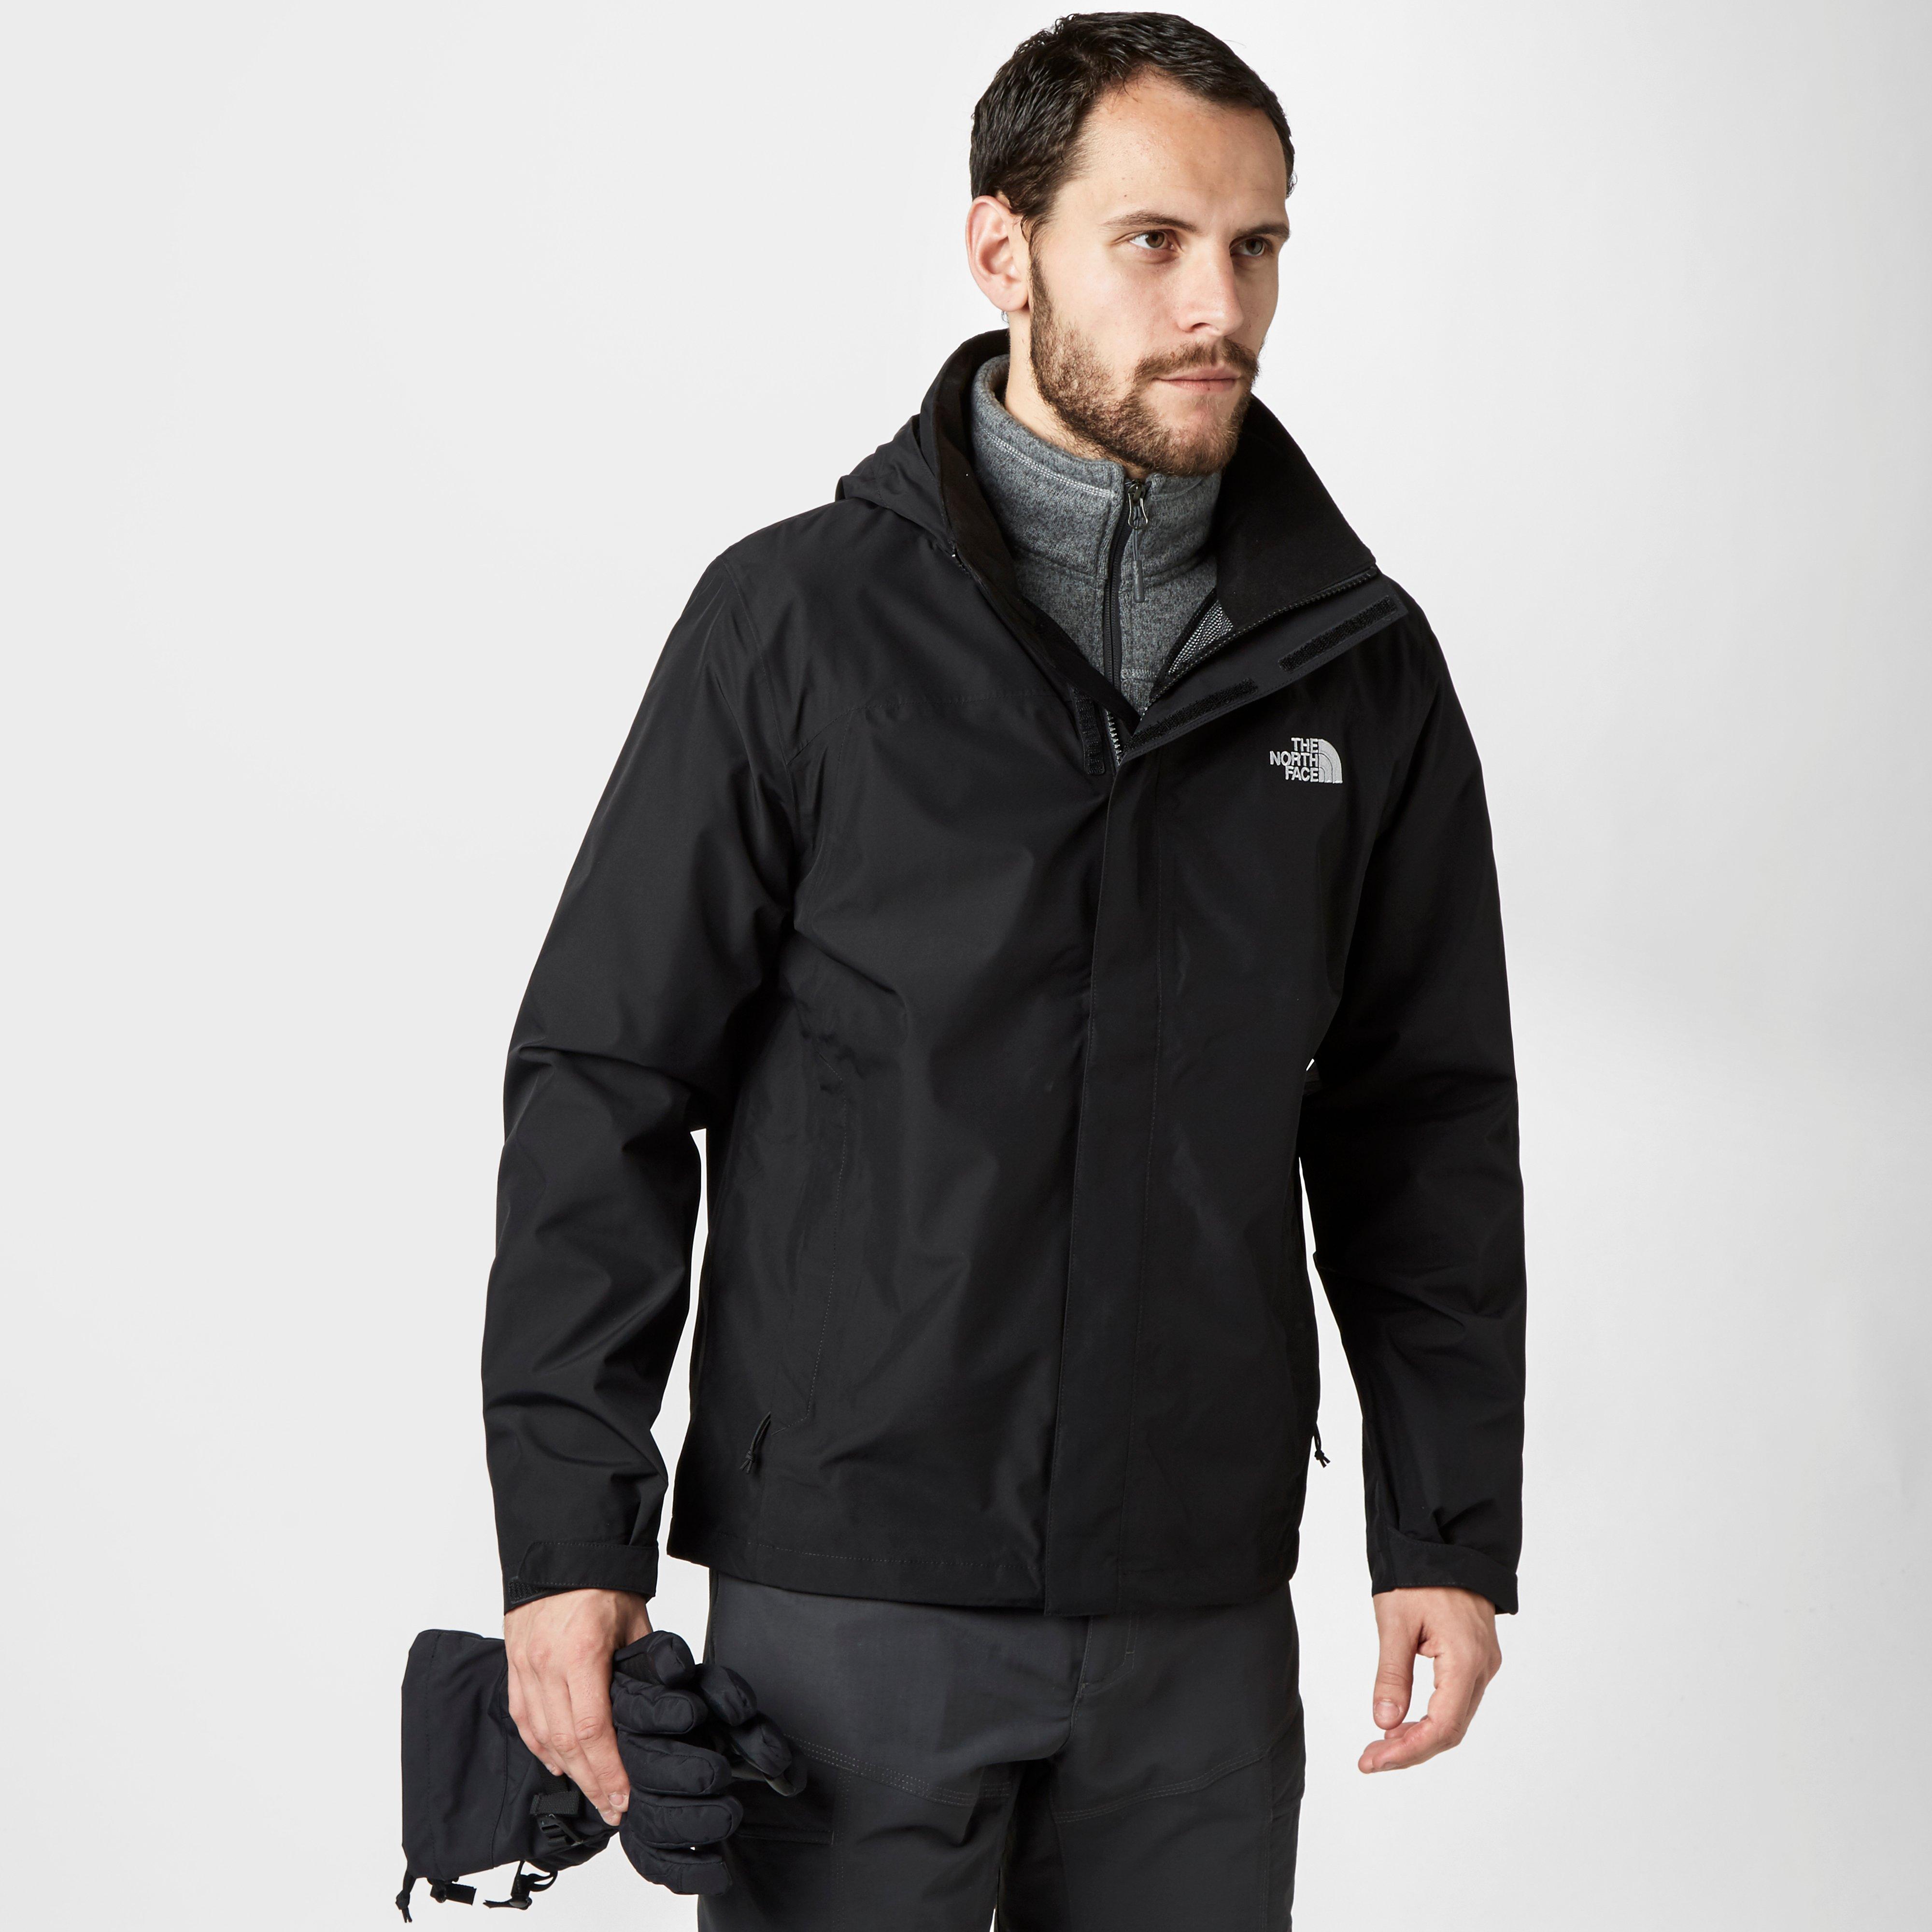 Adidas originals mens down parka jacket winter coat – Modische Jacken